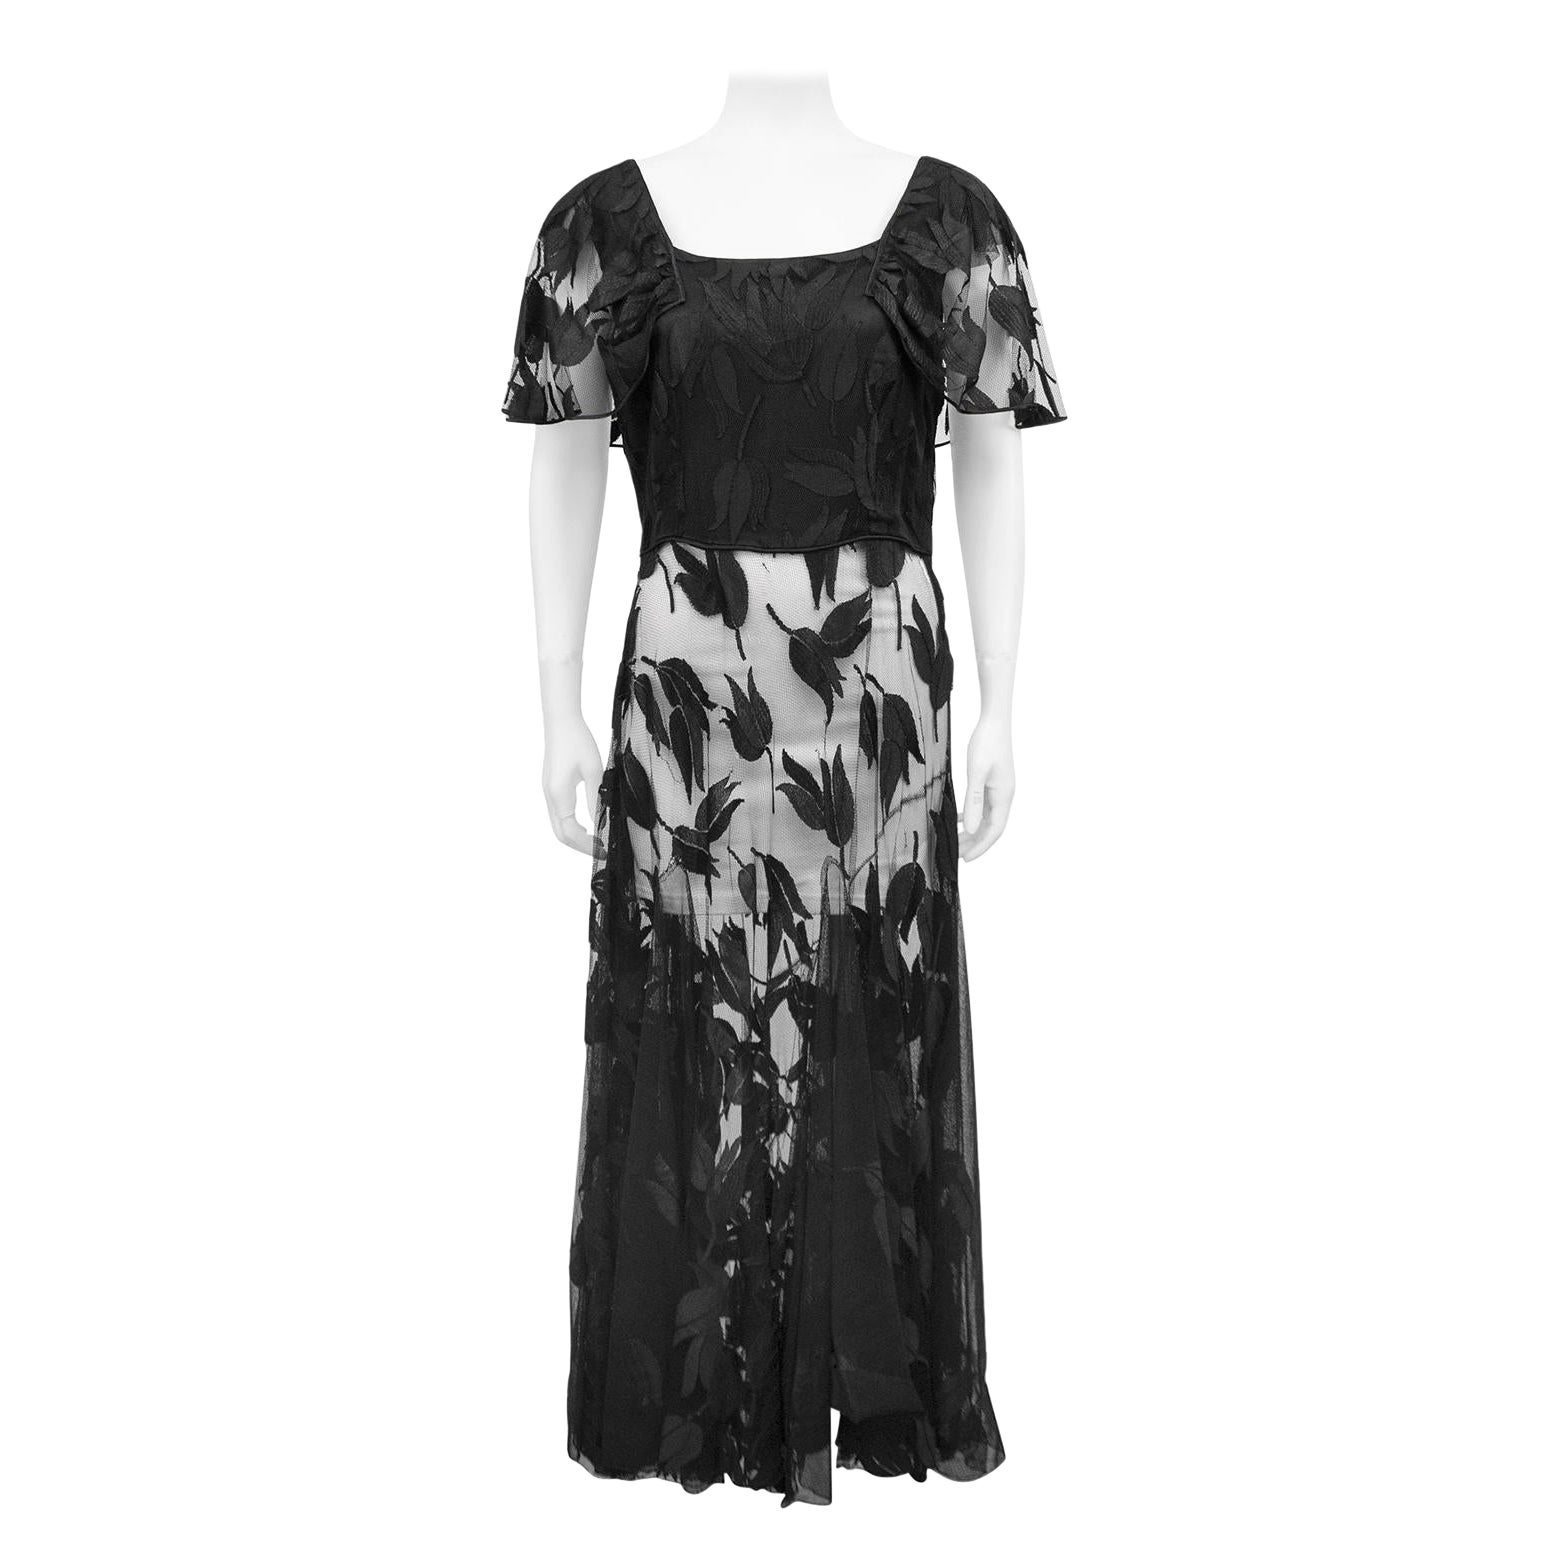 Vintage 1940's Black Net Gown with Floral Motif For Sale